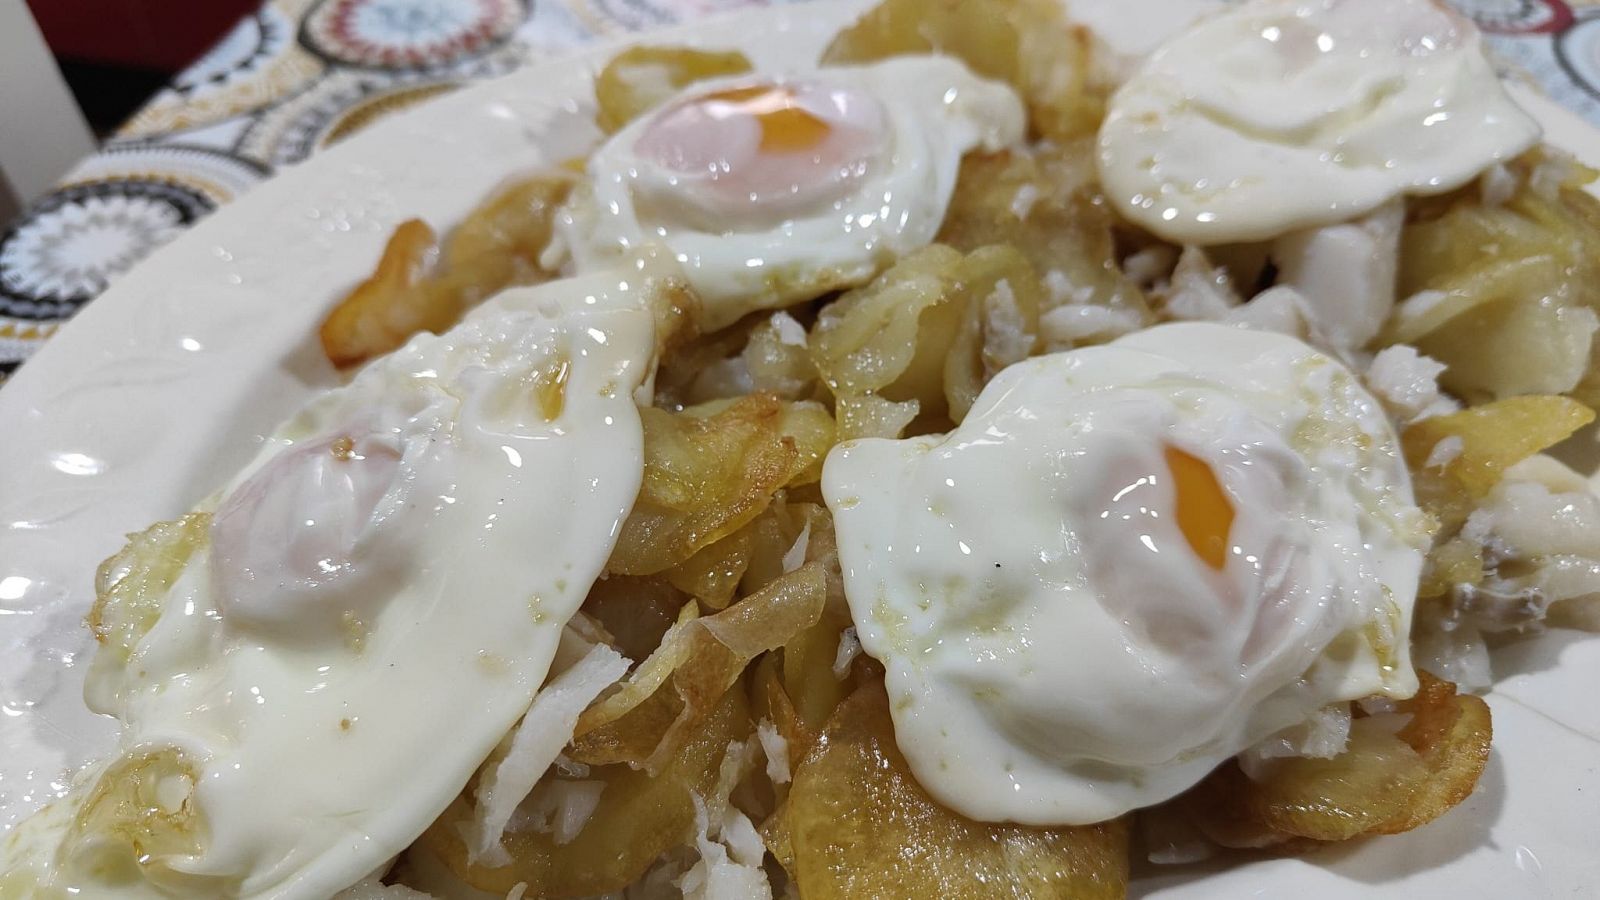 Mañaneros: Receta de huevos rotos con bacalao, fácil y paso a paso